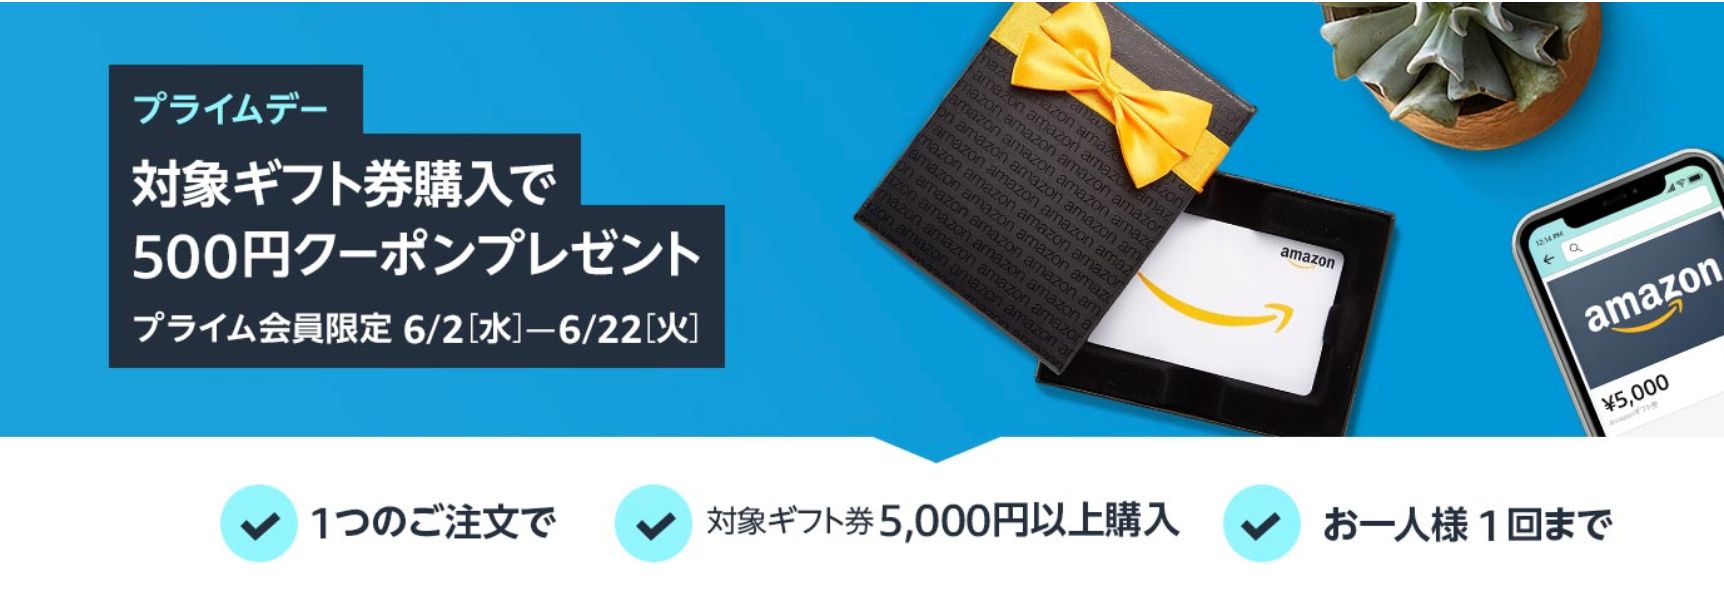 Amazonギフト券購入で500円クーポン